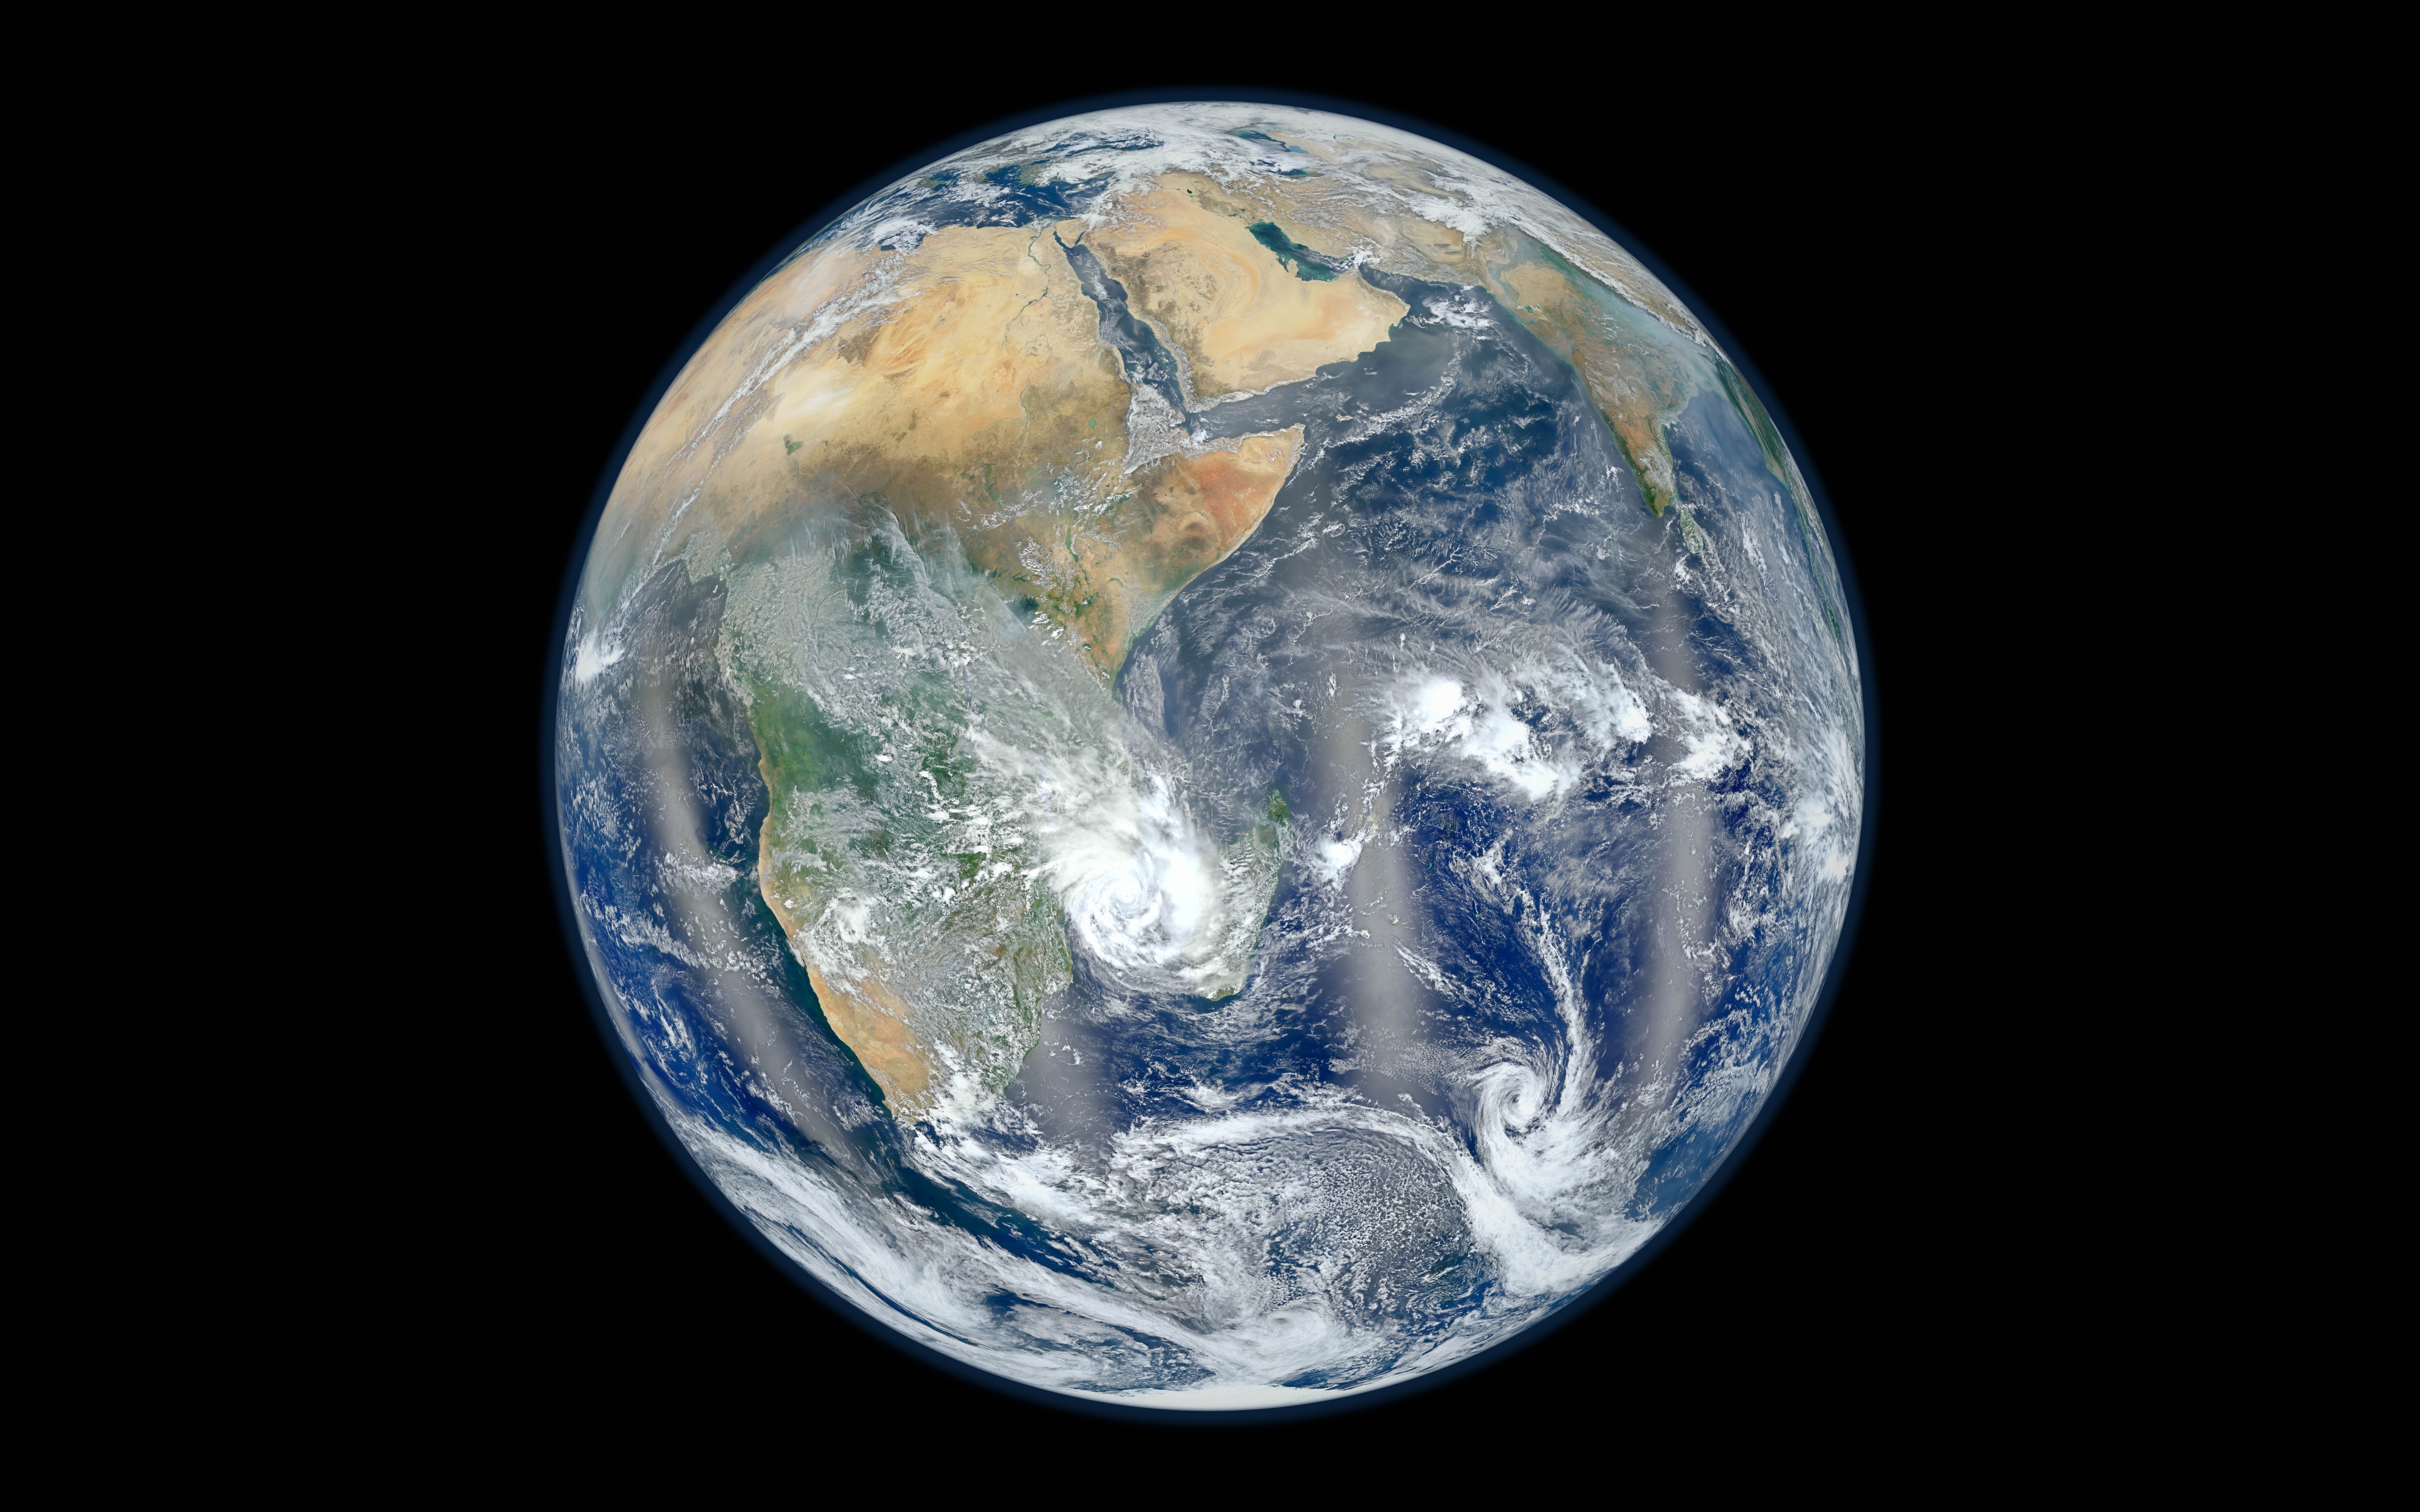 Планета на черном фоне. Планета земля. Изображение планеты земля. Планета земля из космоса. Вид земли из космоса.